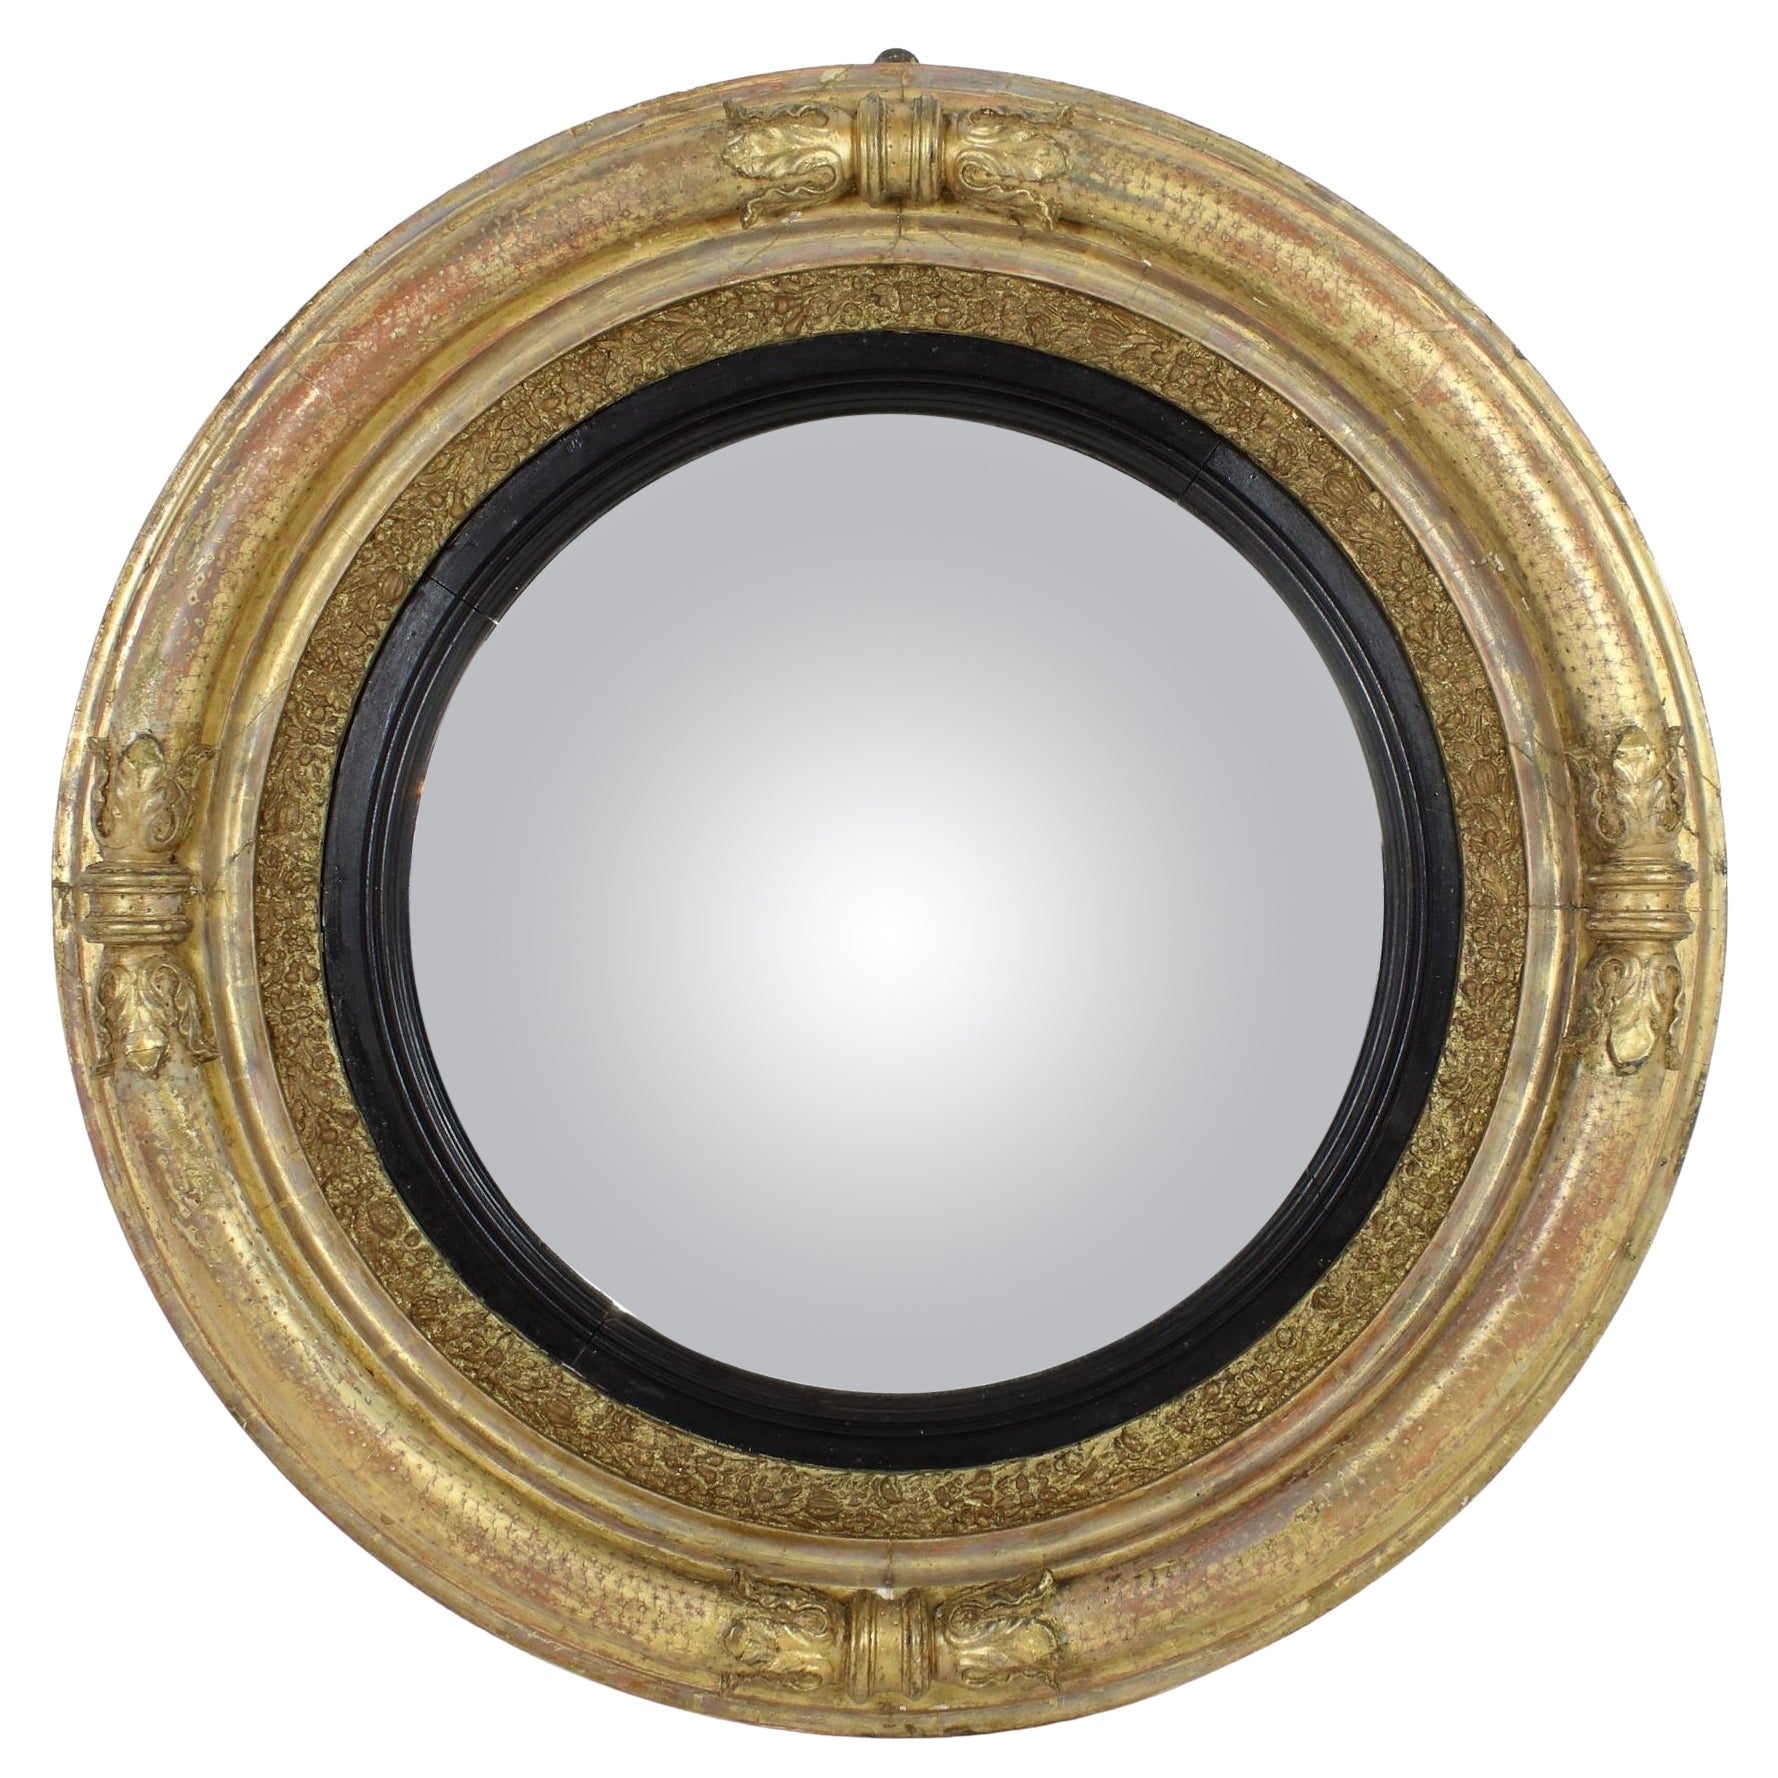 Early 19th Century Regency/Georgian Giltwood Circular Convex Butler's Mirror For Sale